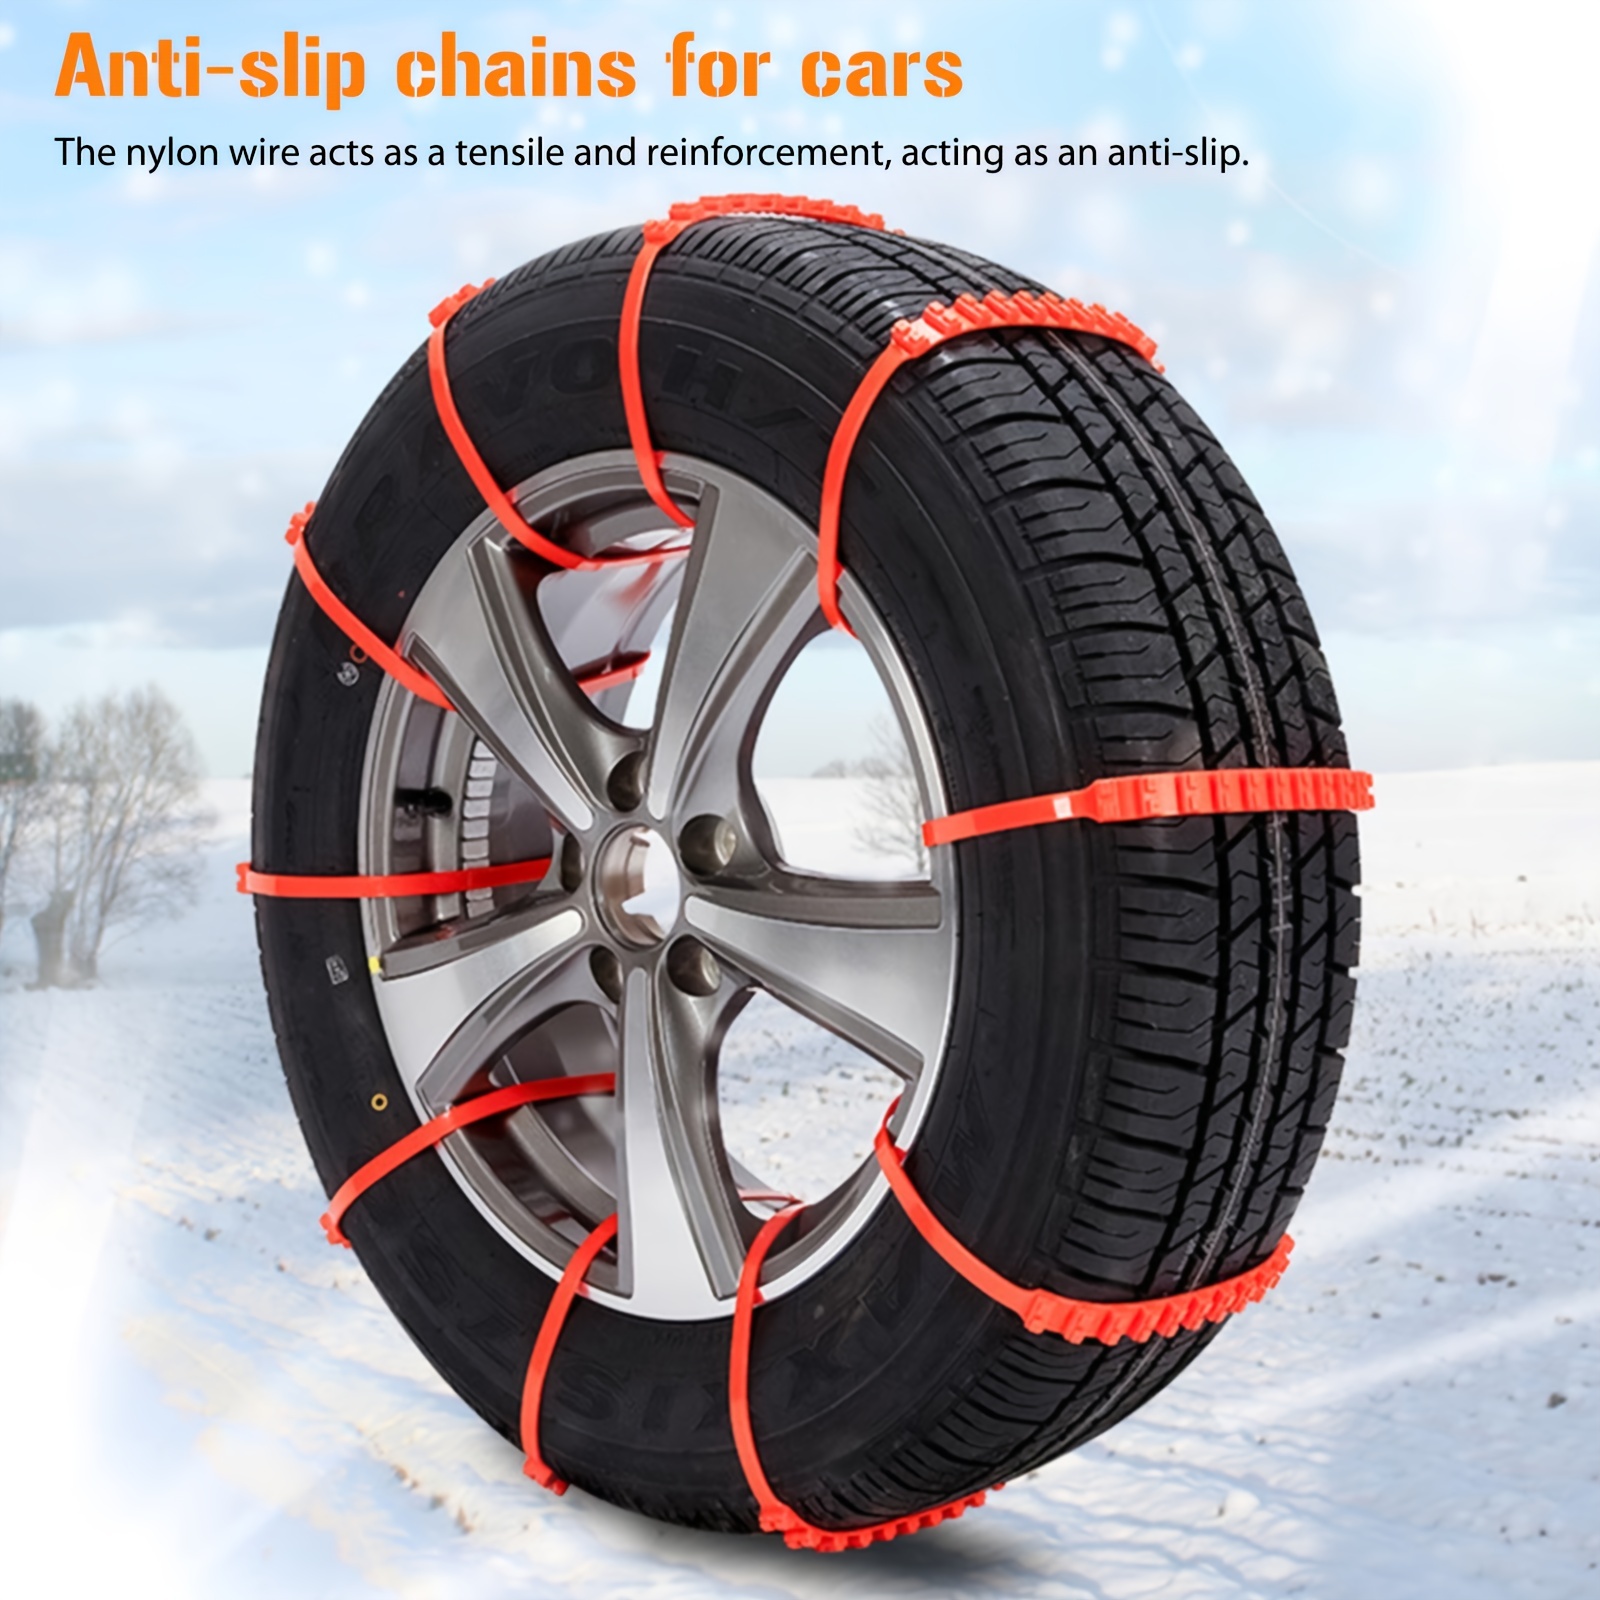 

Universal Car Styling Chains Adjustable Nylon Suv Wheel Tires Snow Chain (10pcs)